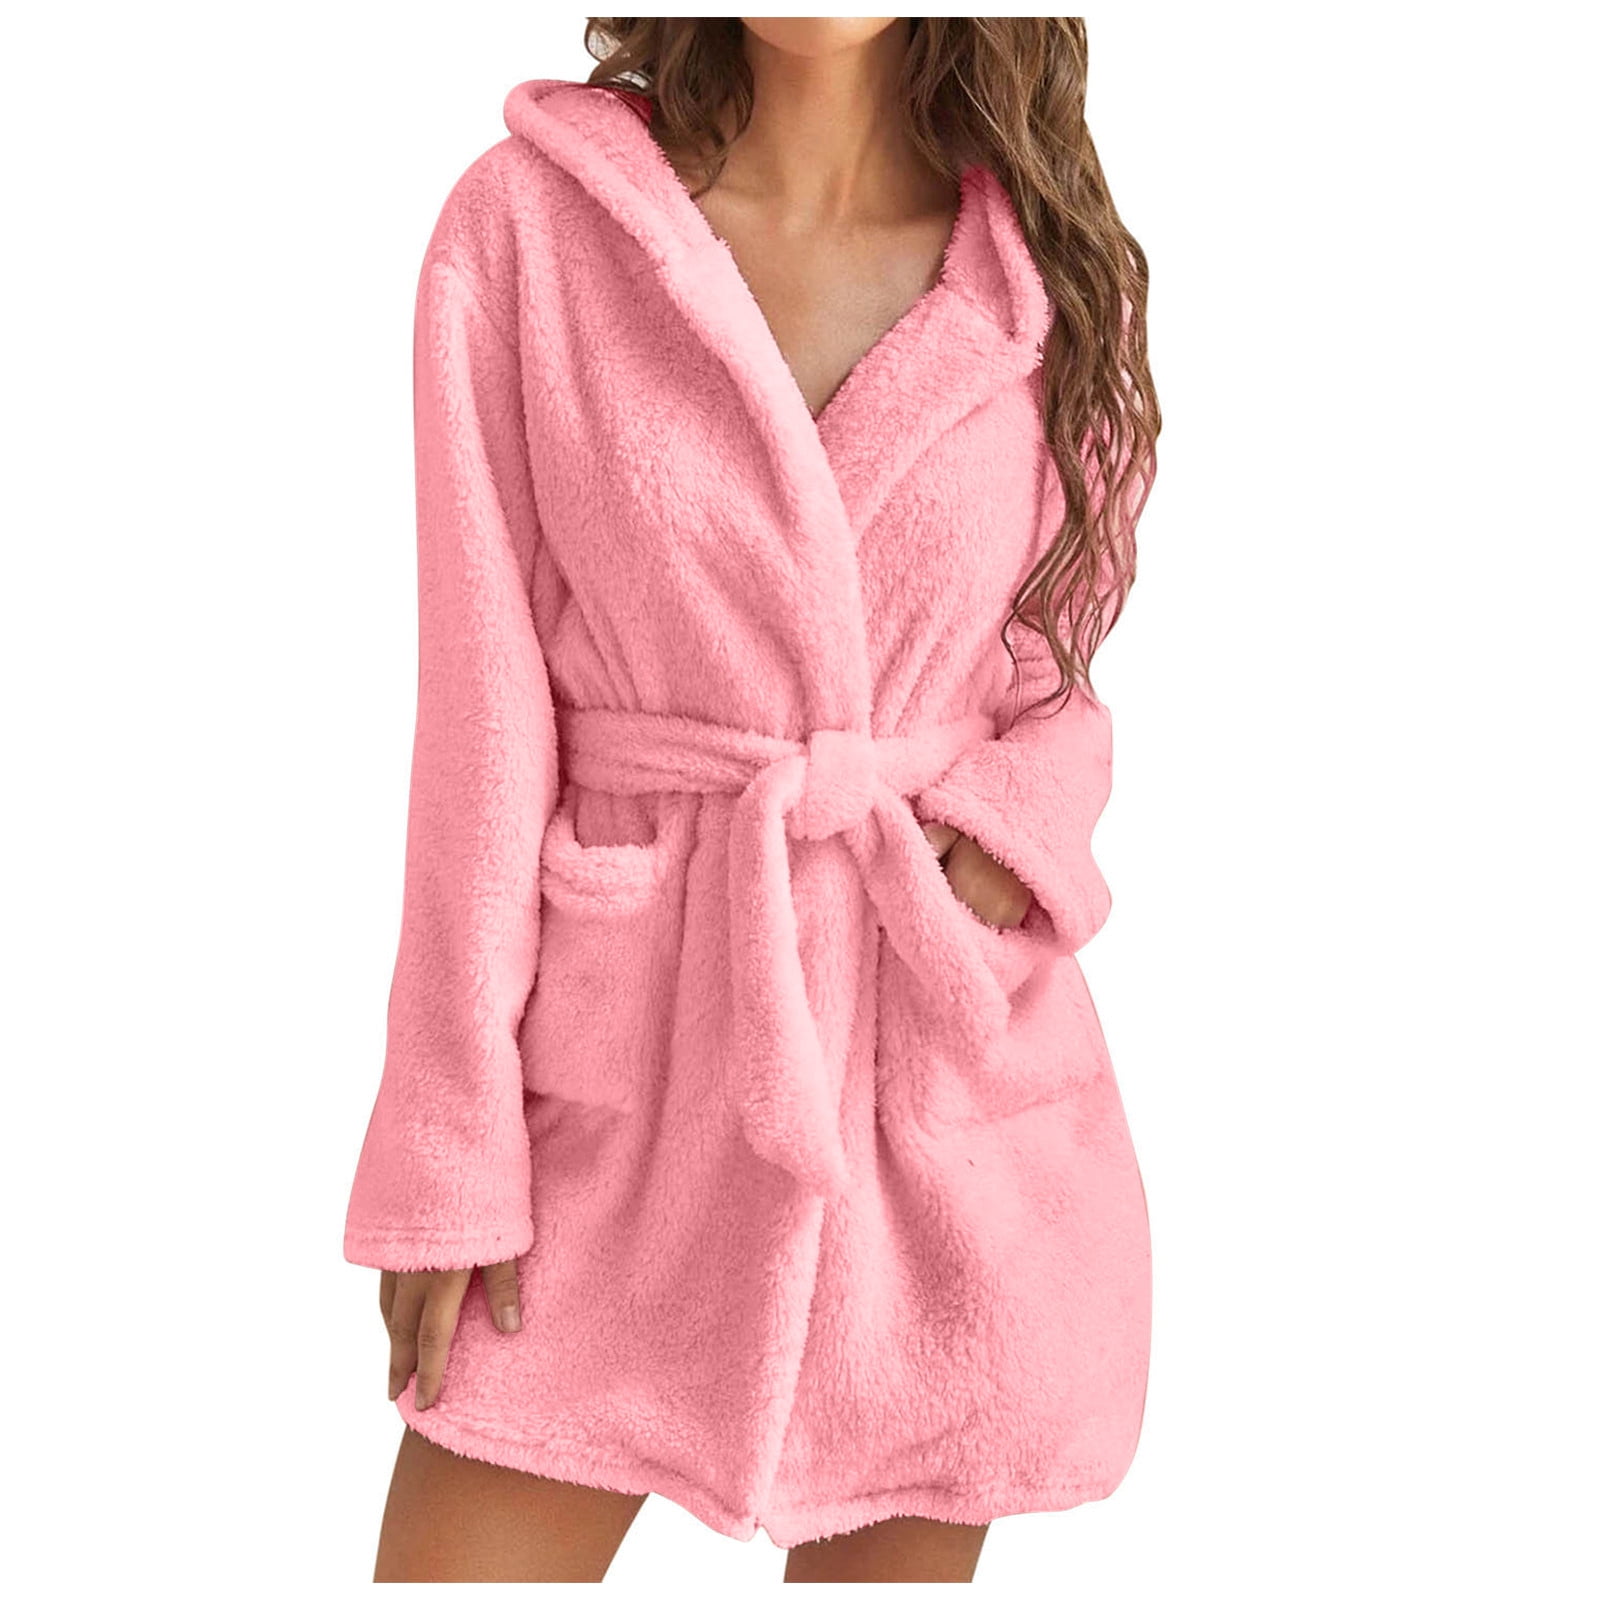 YanHoo Plush Fluffy Terry Cloth Women Lightweight Towel Robe Winter Warm Fleece Bathrobe Bath Gown Soft Ladies Robe Spa Shower Robe 3527e94e f6bb 414d b3aa 4beb96b3e1d0.05f0e6dc1fe24a41fde2d4268b9c7828